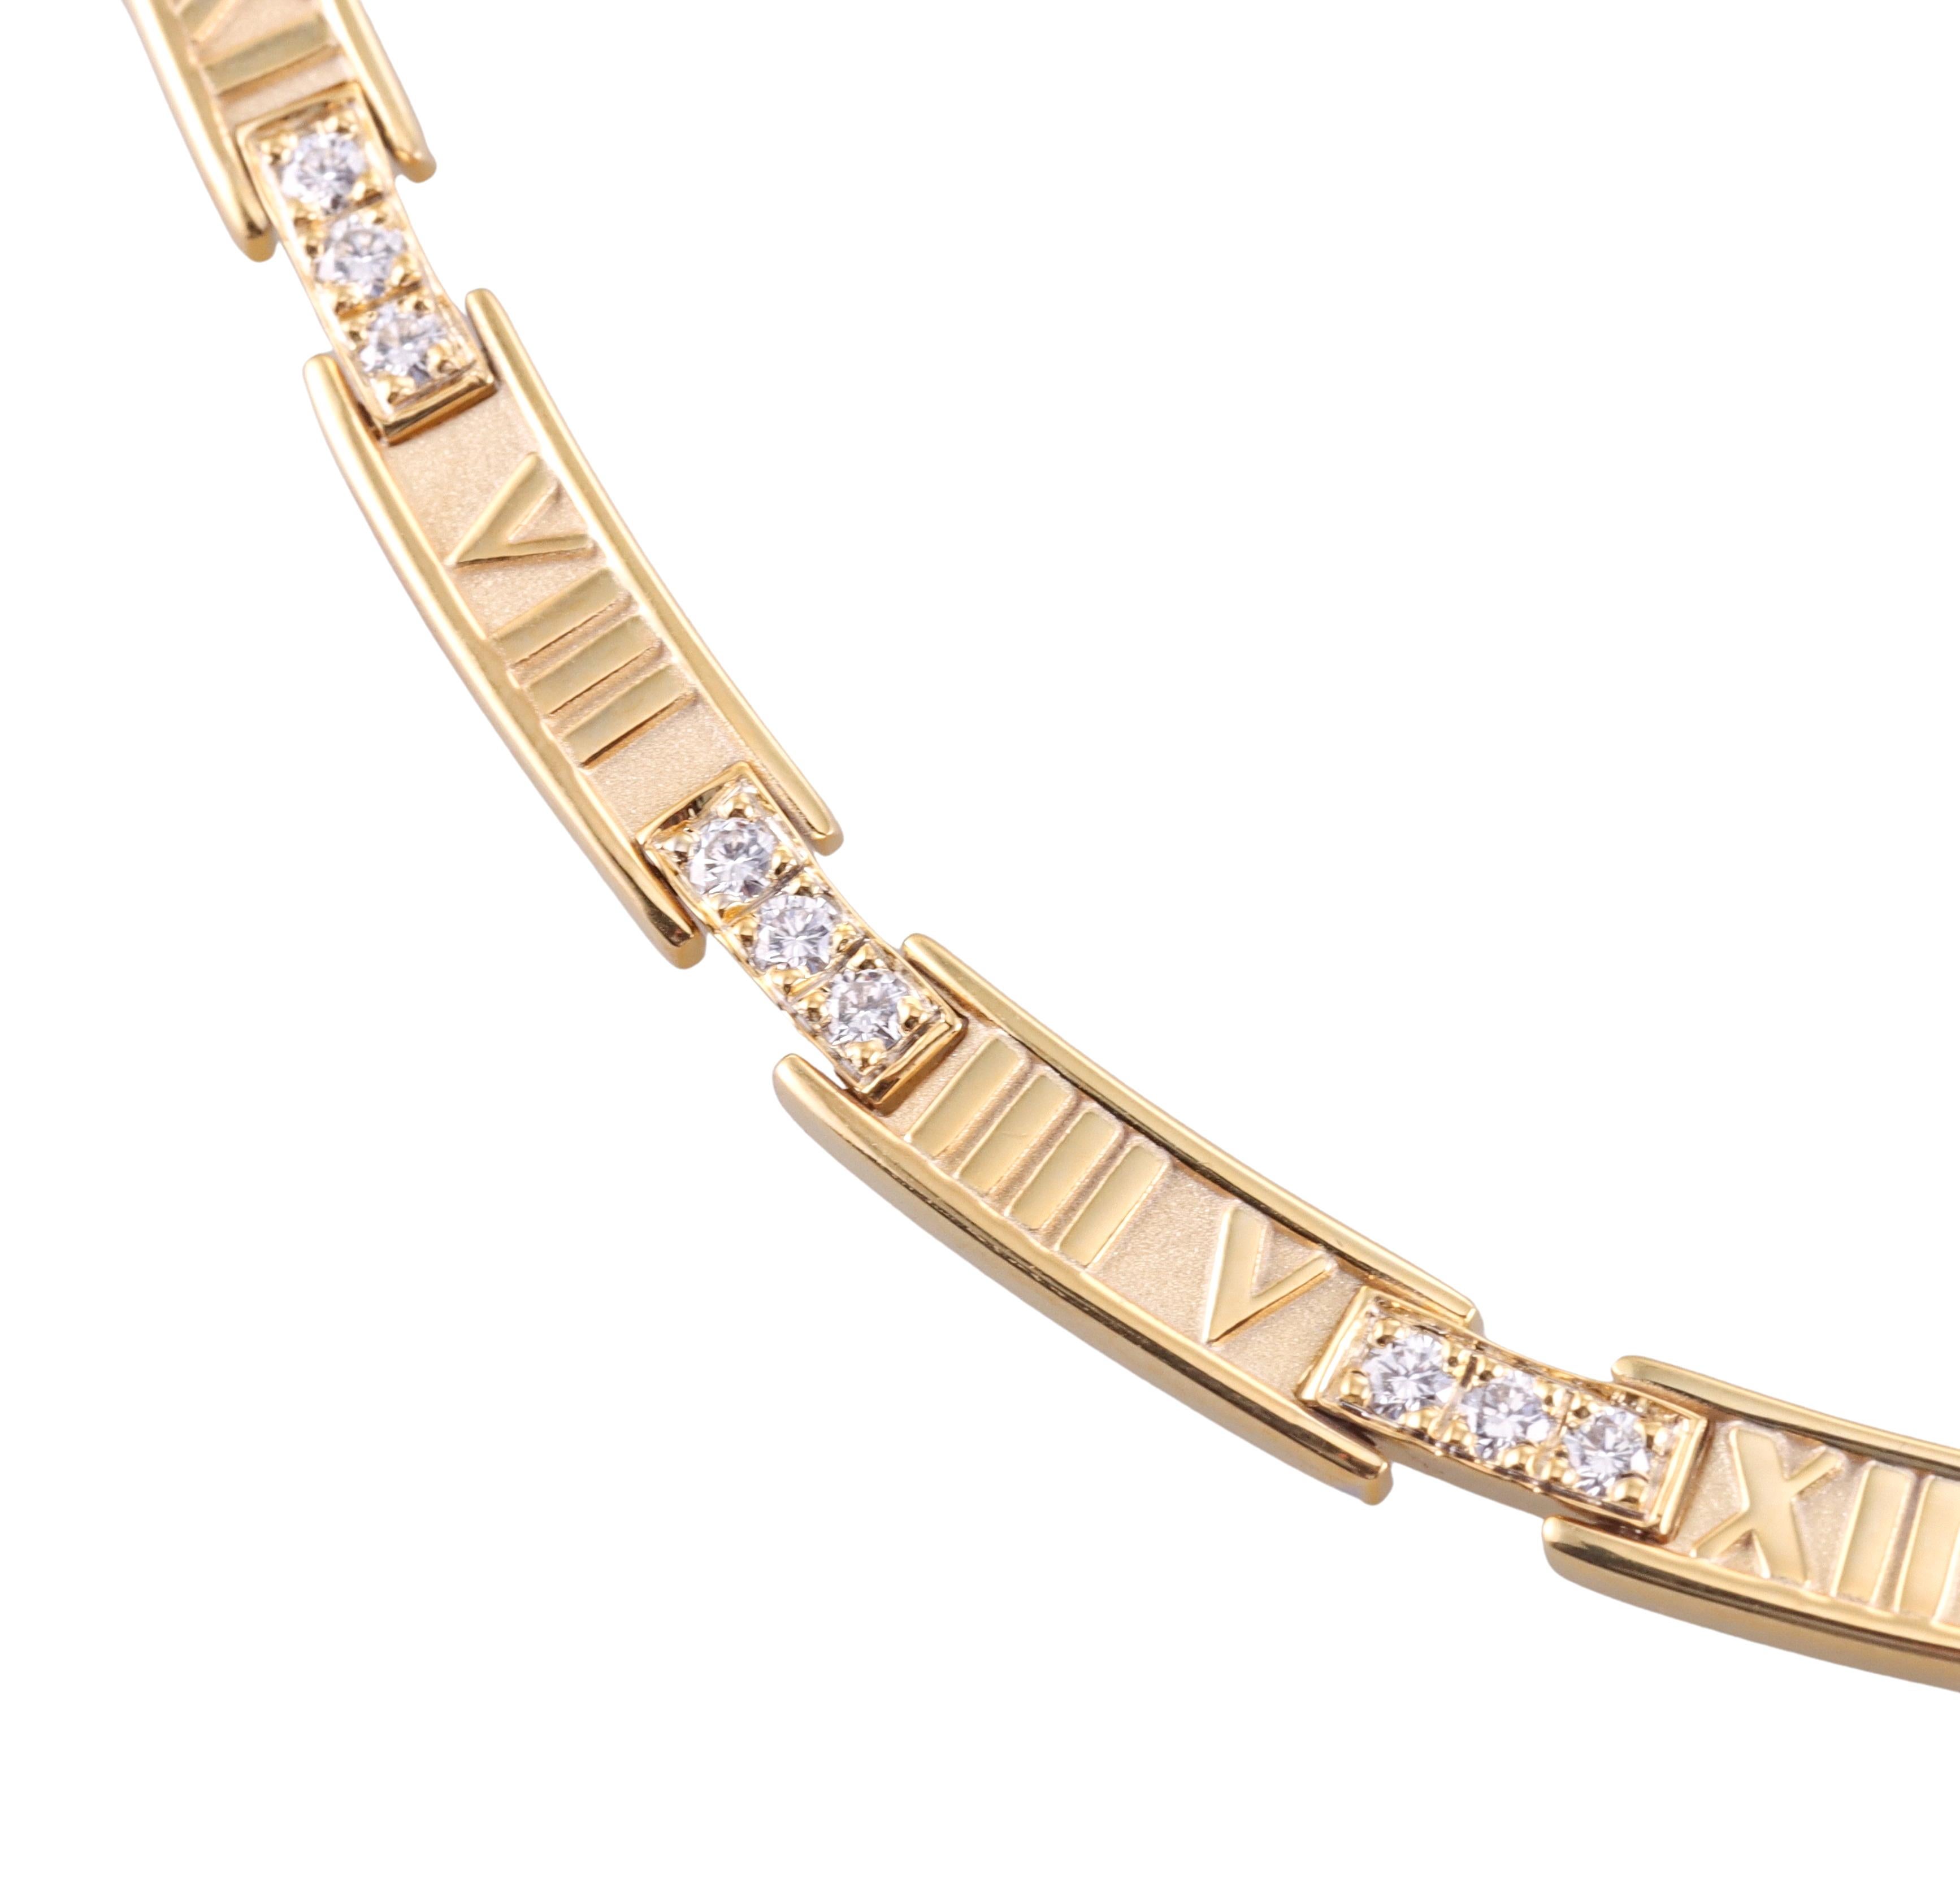 Collier Atlas en or jaune 18 carats de Tiffany & Co, comprenant dix maillons de diamants - environ 1,00ctw G/VS. Le collier mesure 16,5